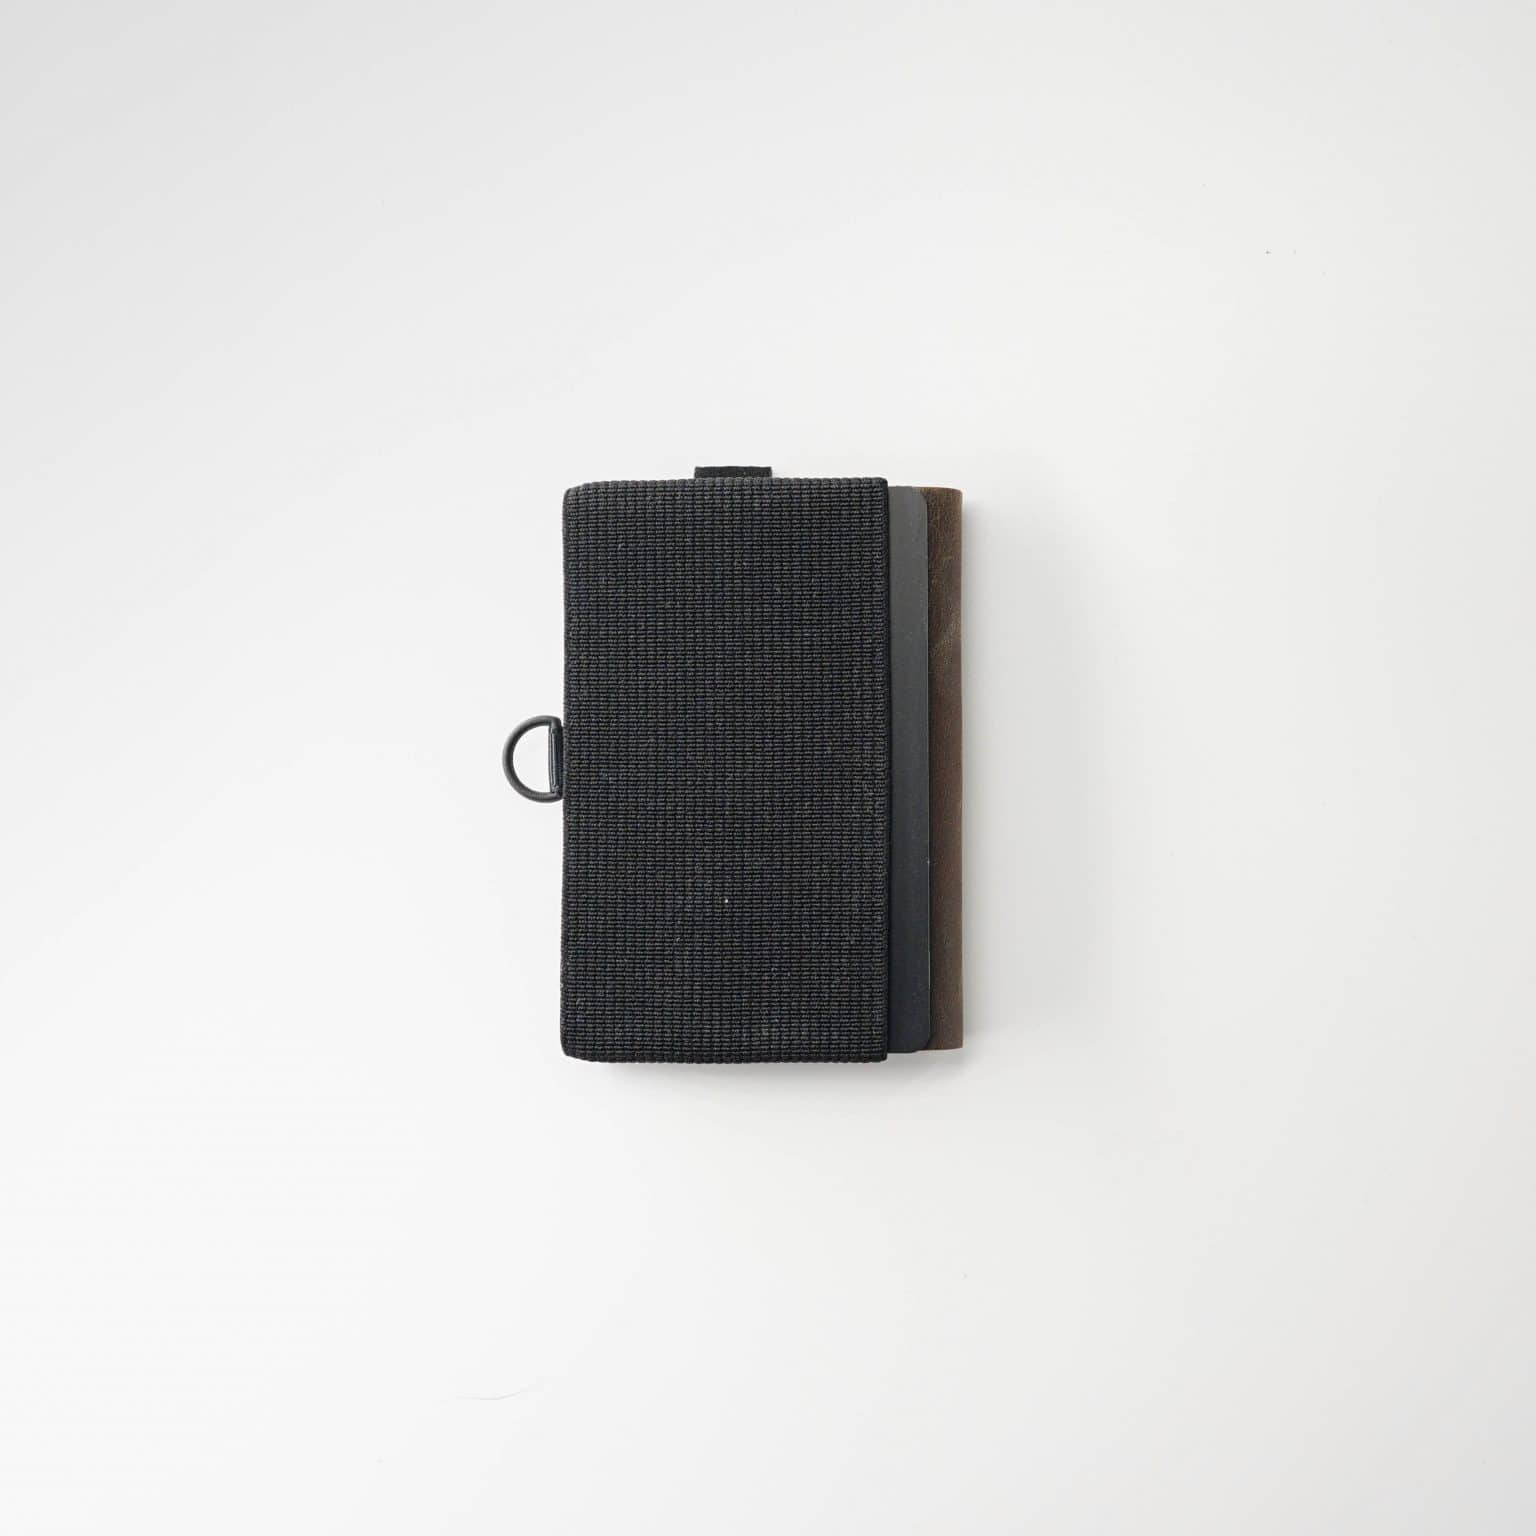 Ultramoderne minimalist portefeuille avec intégration technologique